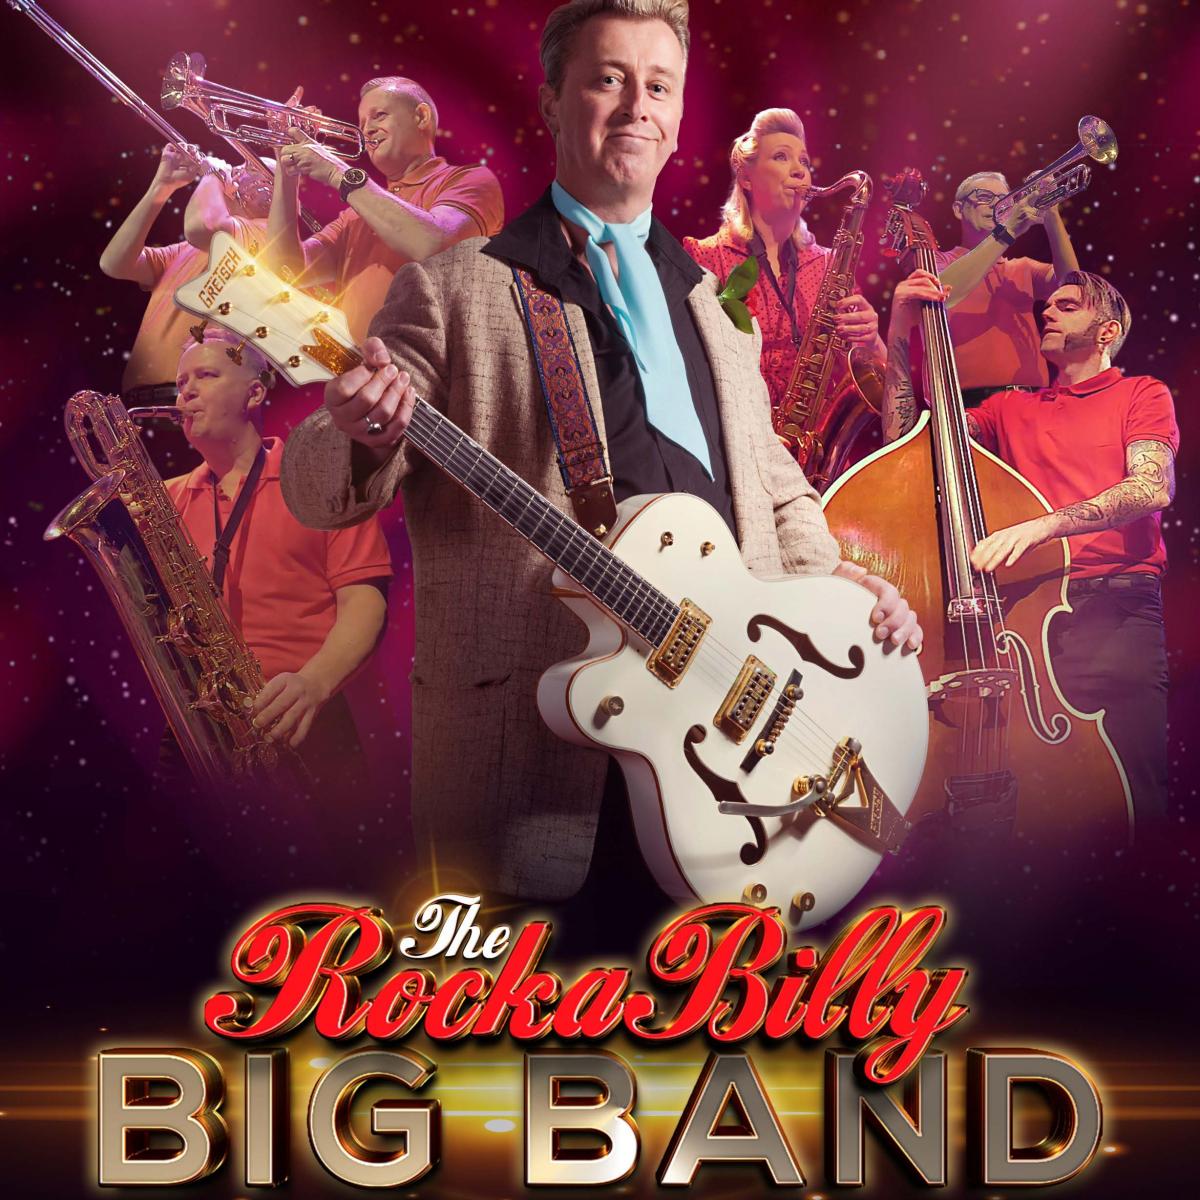 The Rockabilly Big Band on 22 September 2022